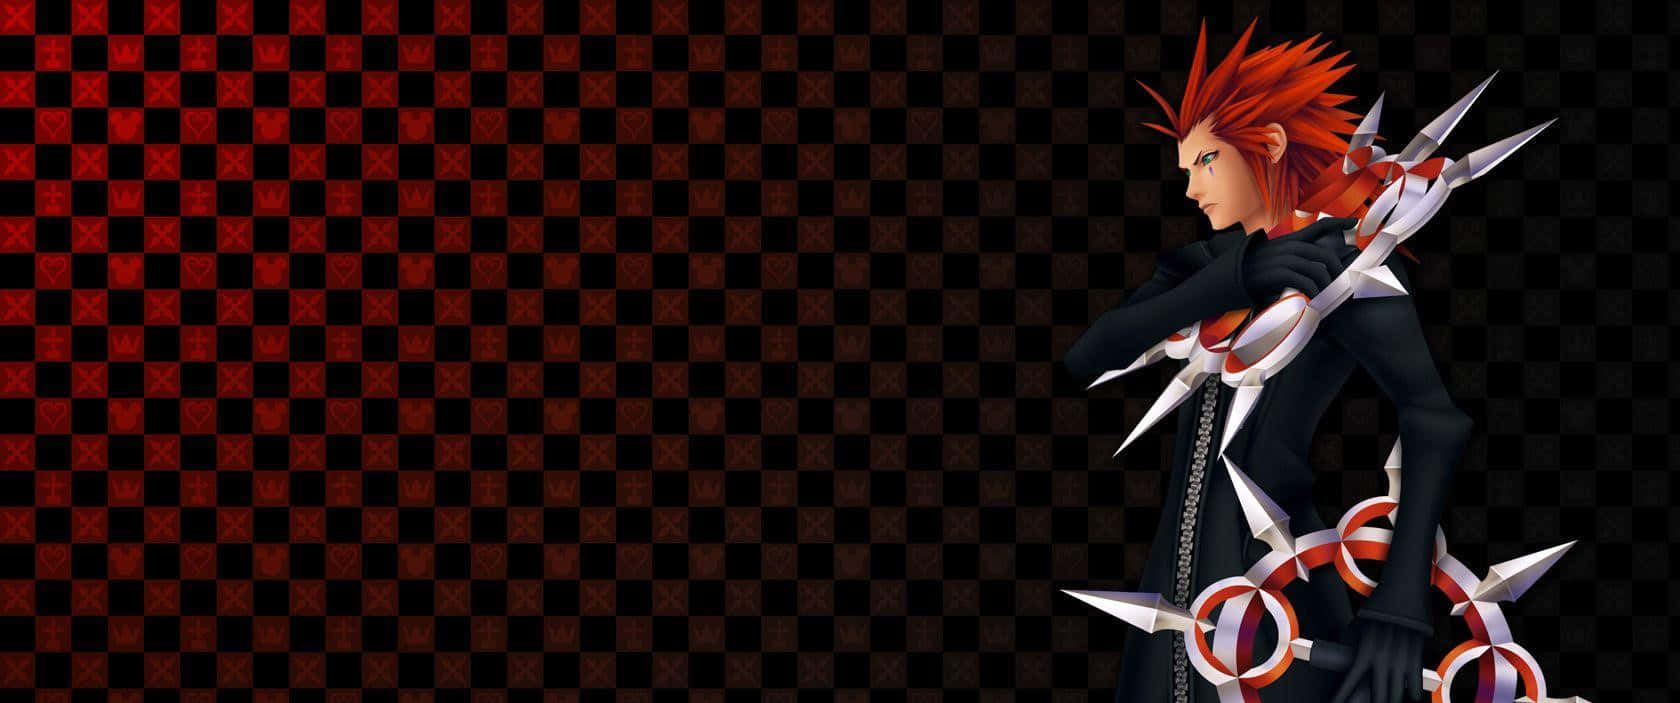 Riku, the Keyblade master from Kingdom Hearts Wallpaper